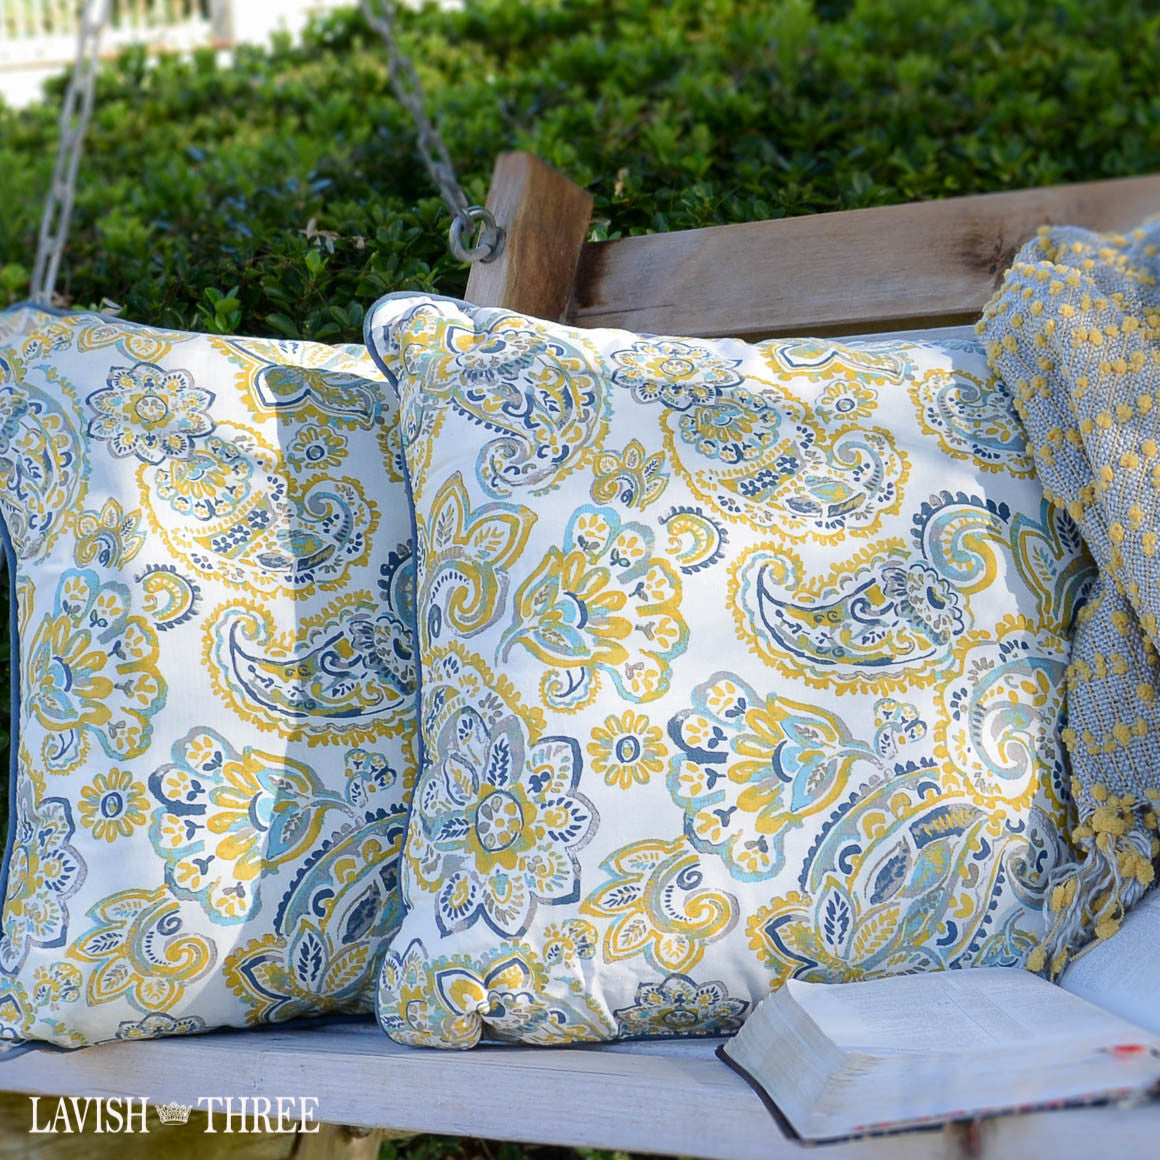 Paisley floral print pillow set in yellow, grey, white - Lavish Three